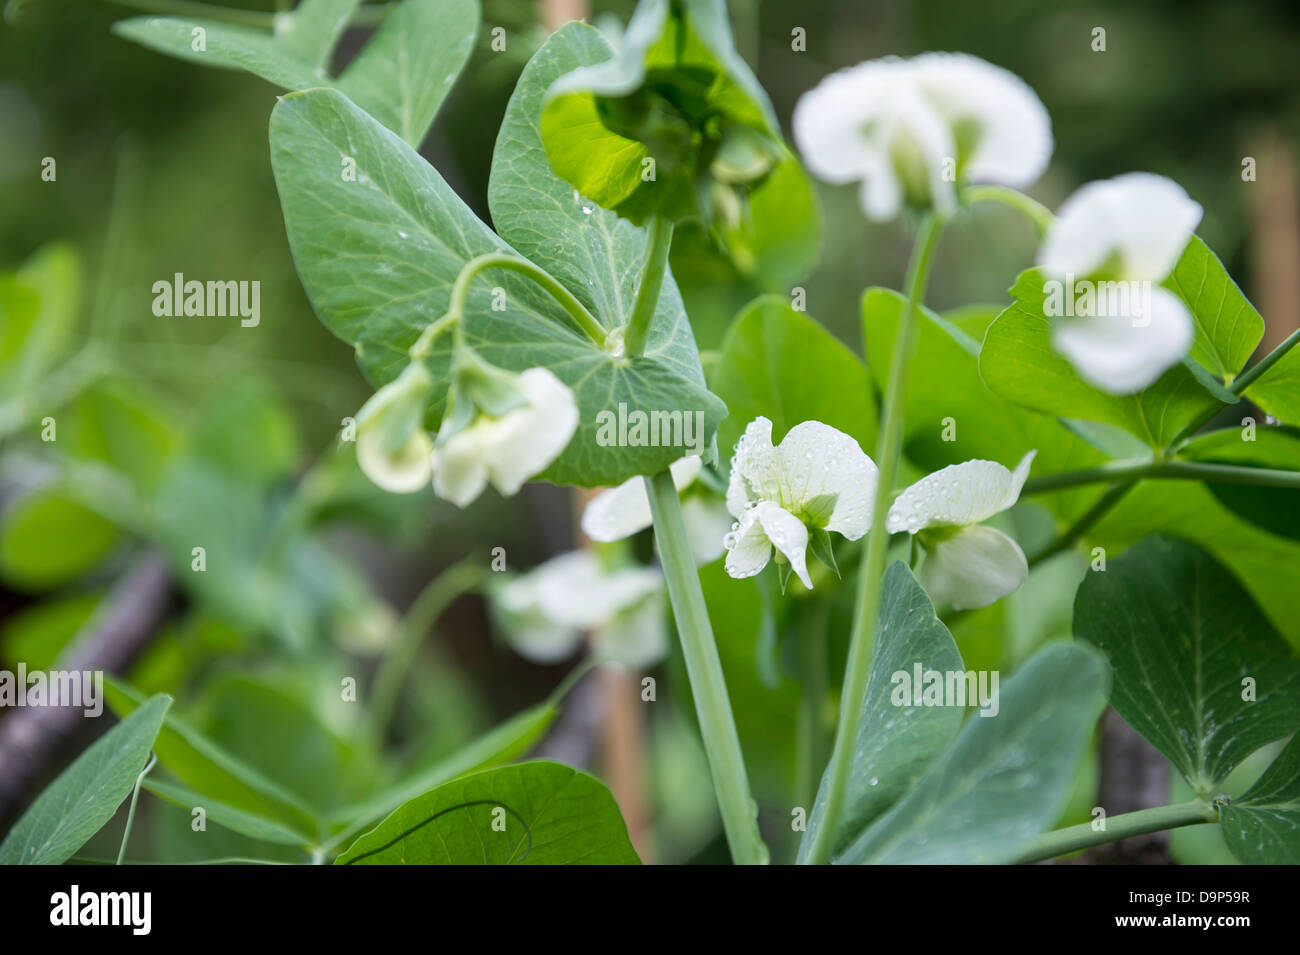 Flowering Pea Plants 'Premium' in Vegetable Patch, UK. Stock Photo